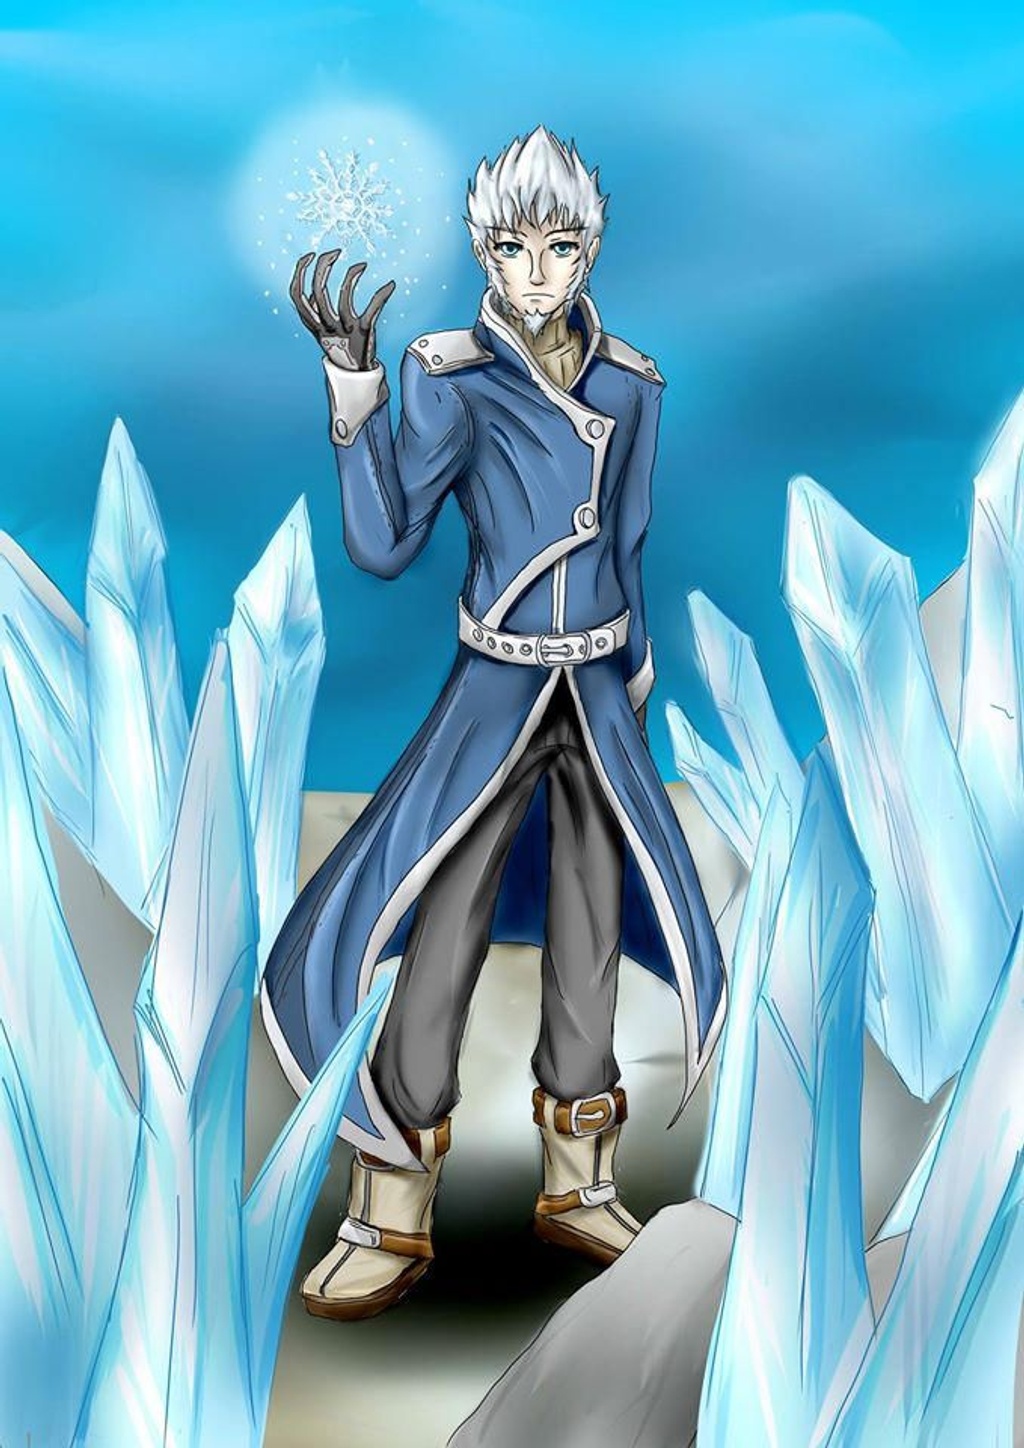 Premium Vector | Ice wizard anime illustration